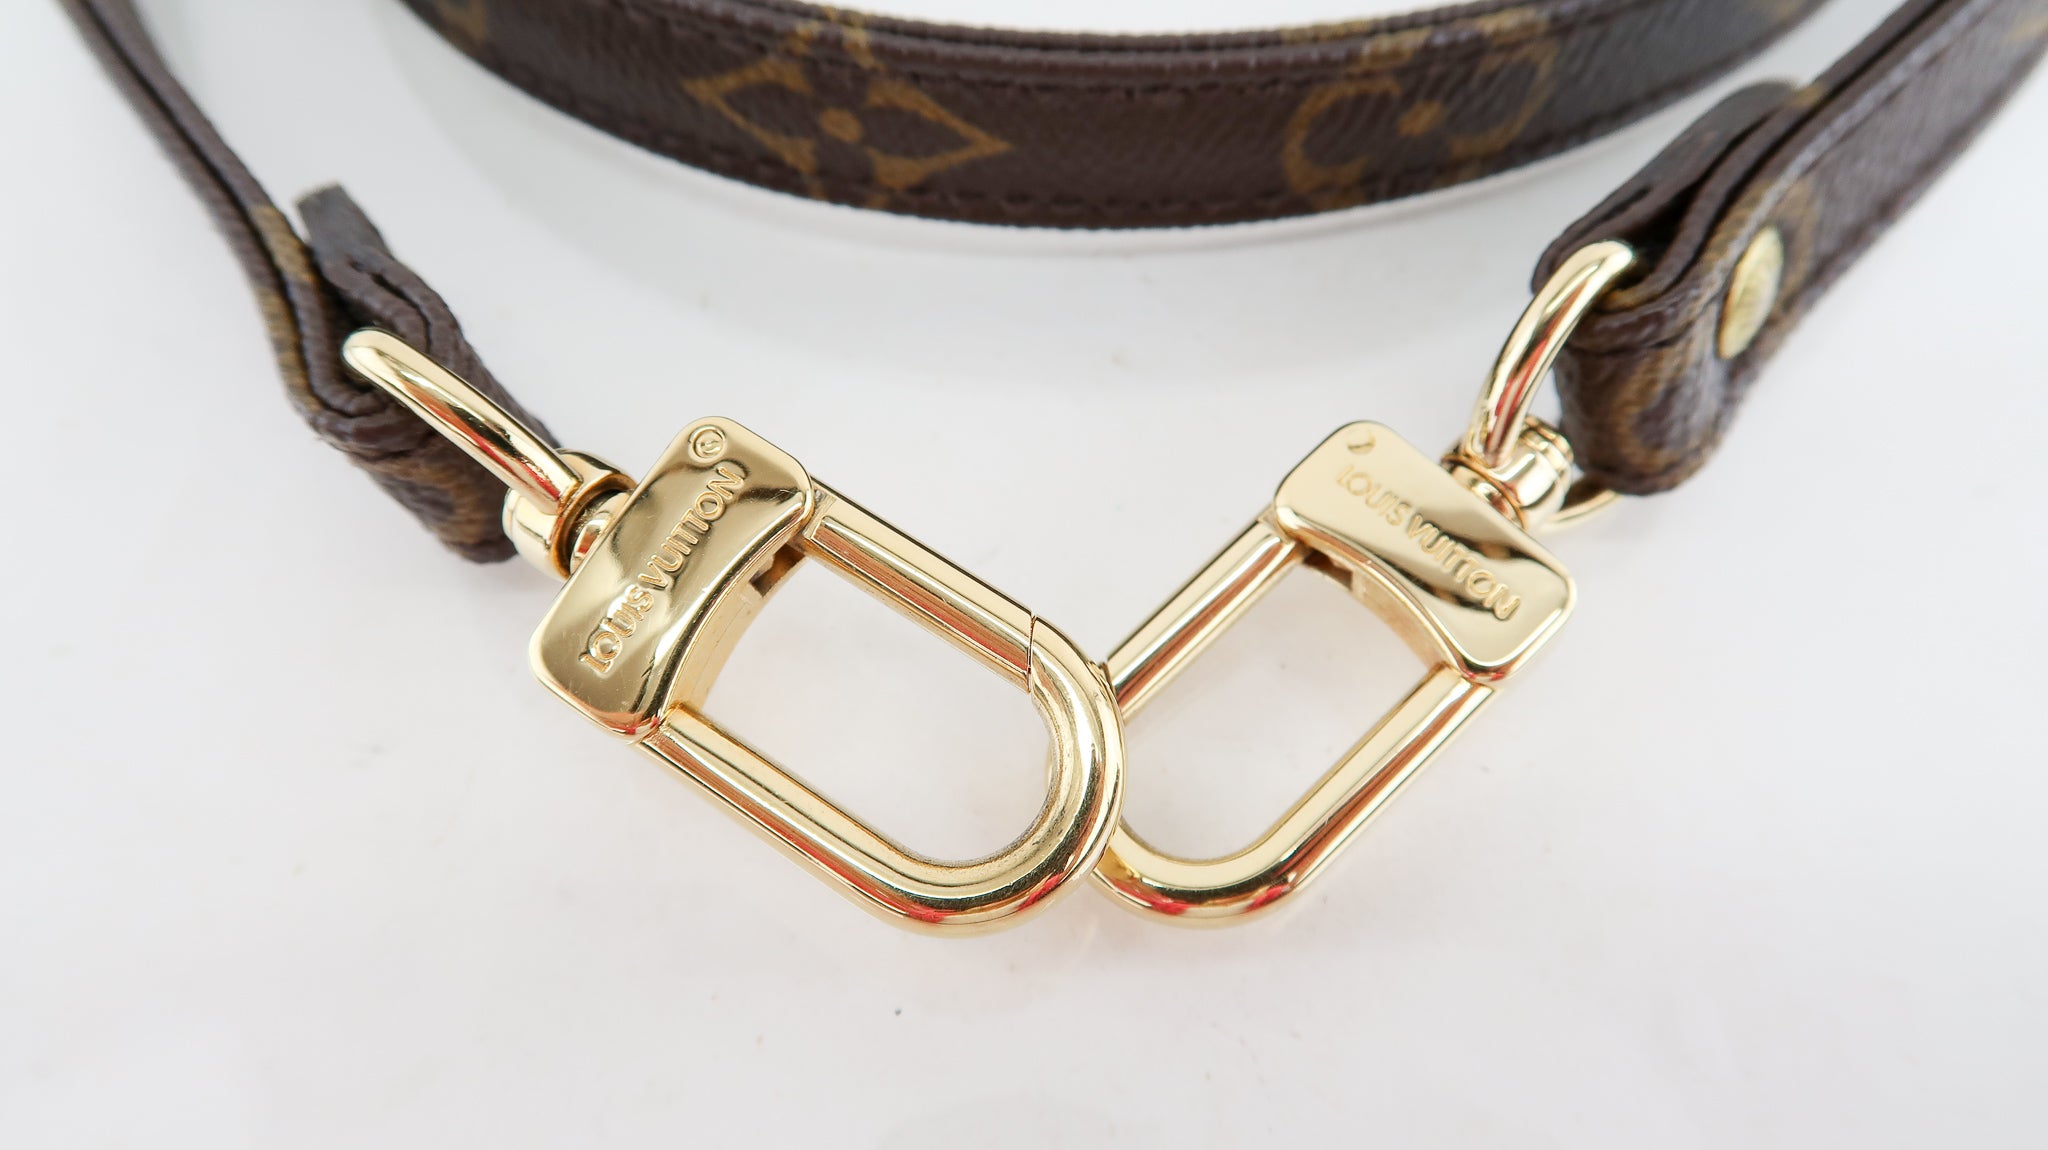 Louis Vuitton Adjustable Shoulder Strap 16mm in Monogram - SOLD